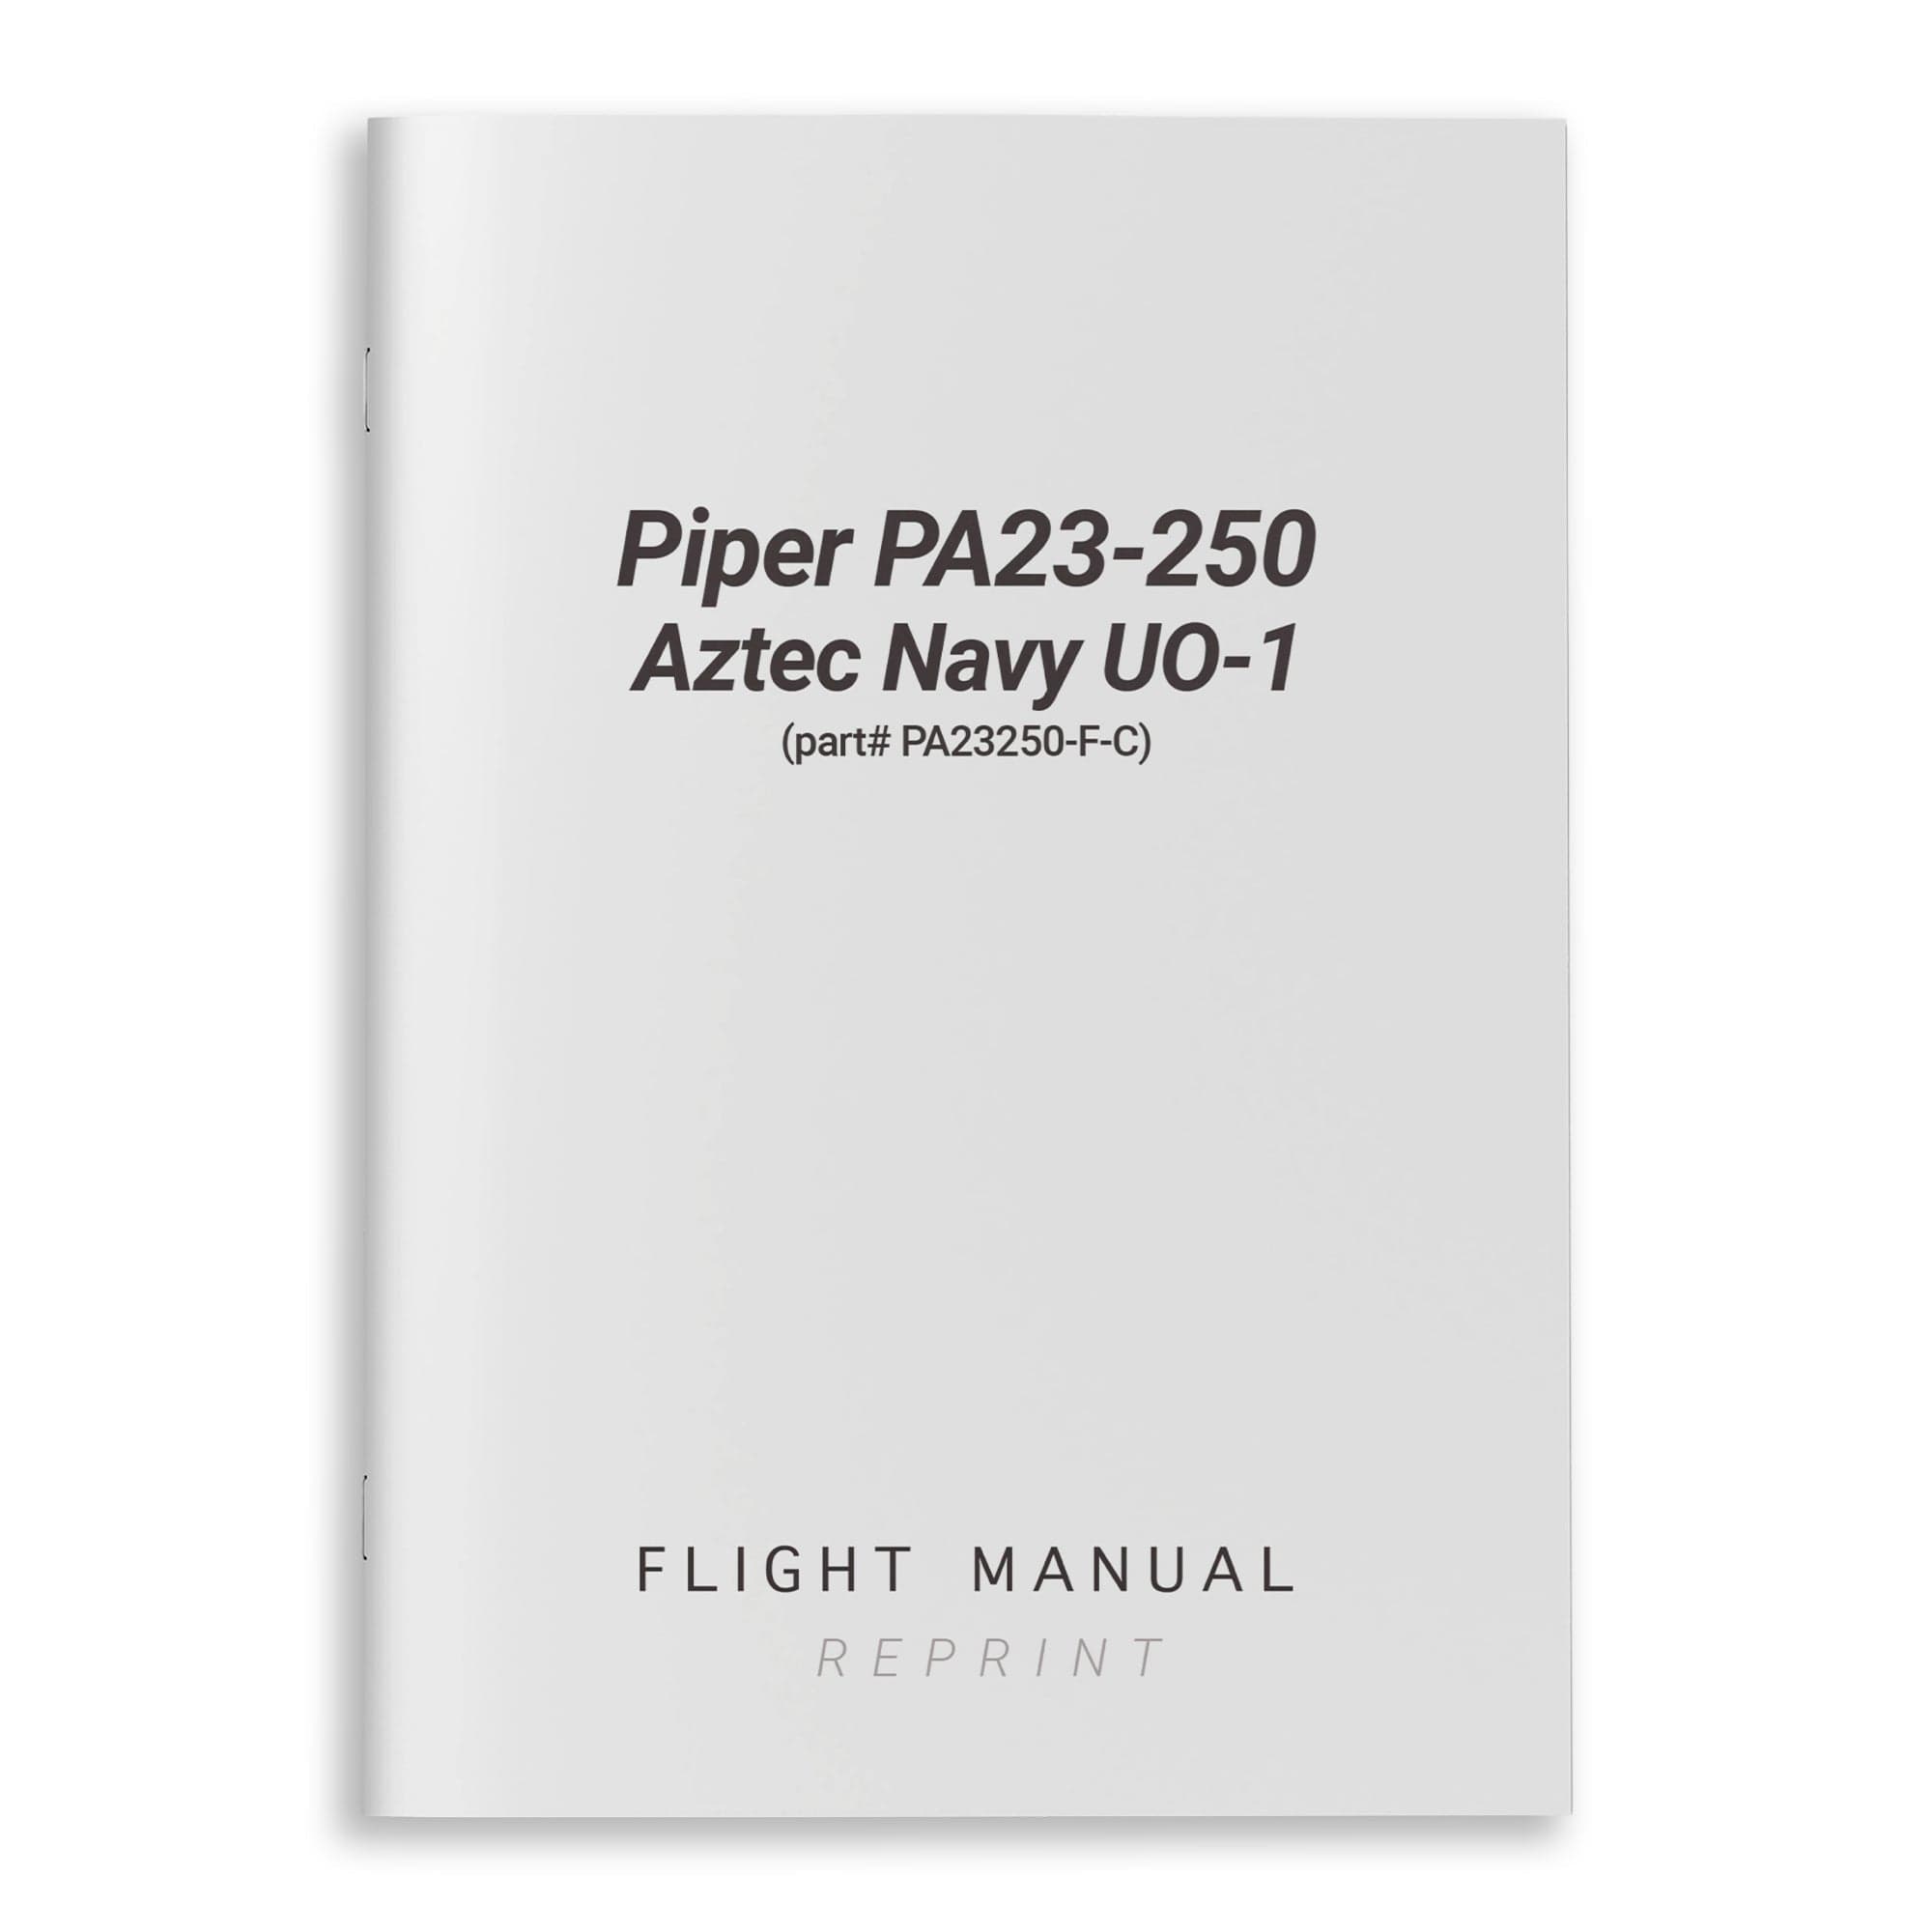 Piper PA23-250 Aztec Navy UO-1 Flight Manual (part# PA23250-F-C)